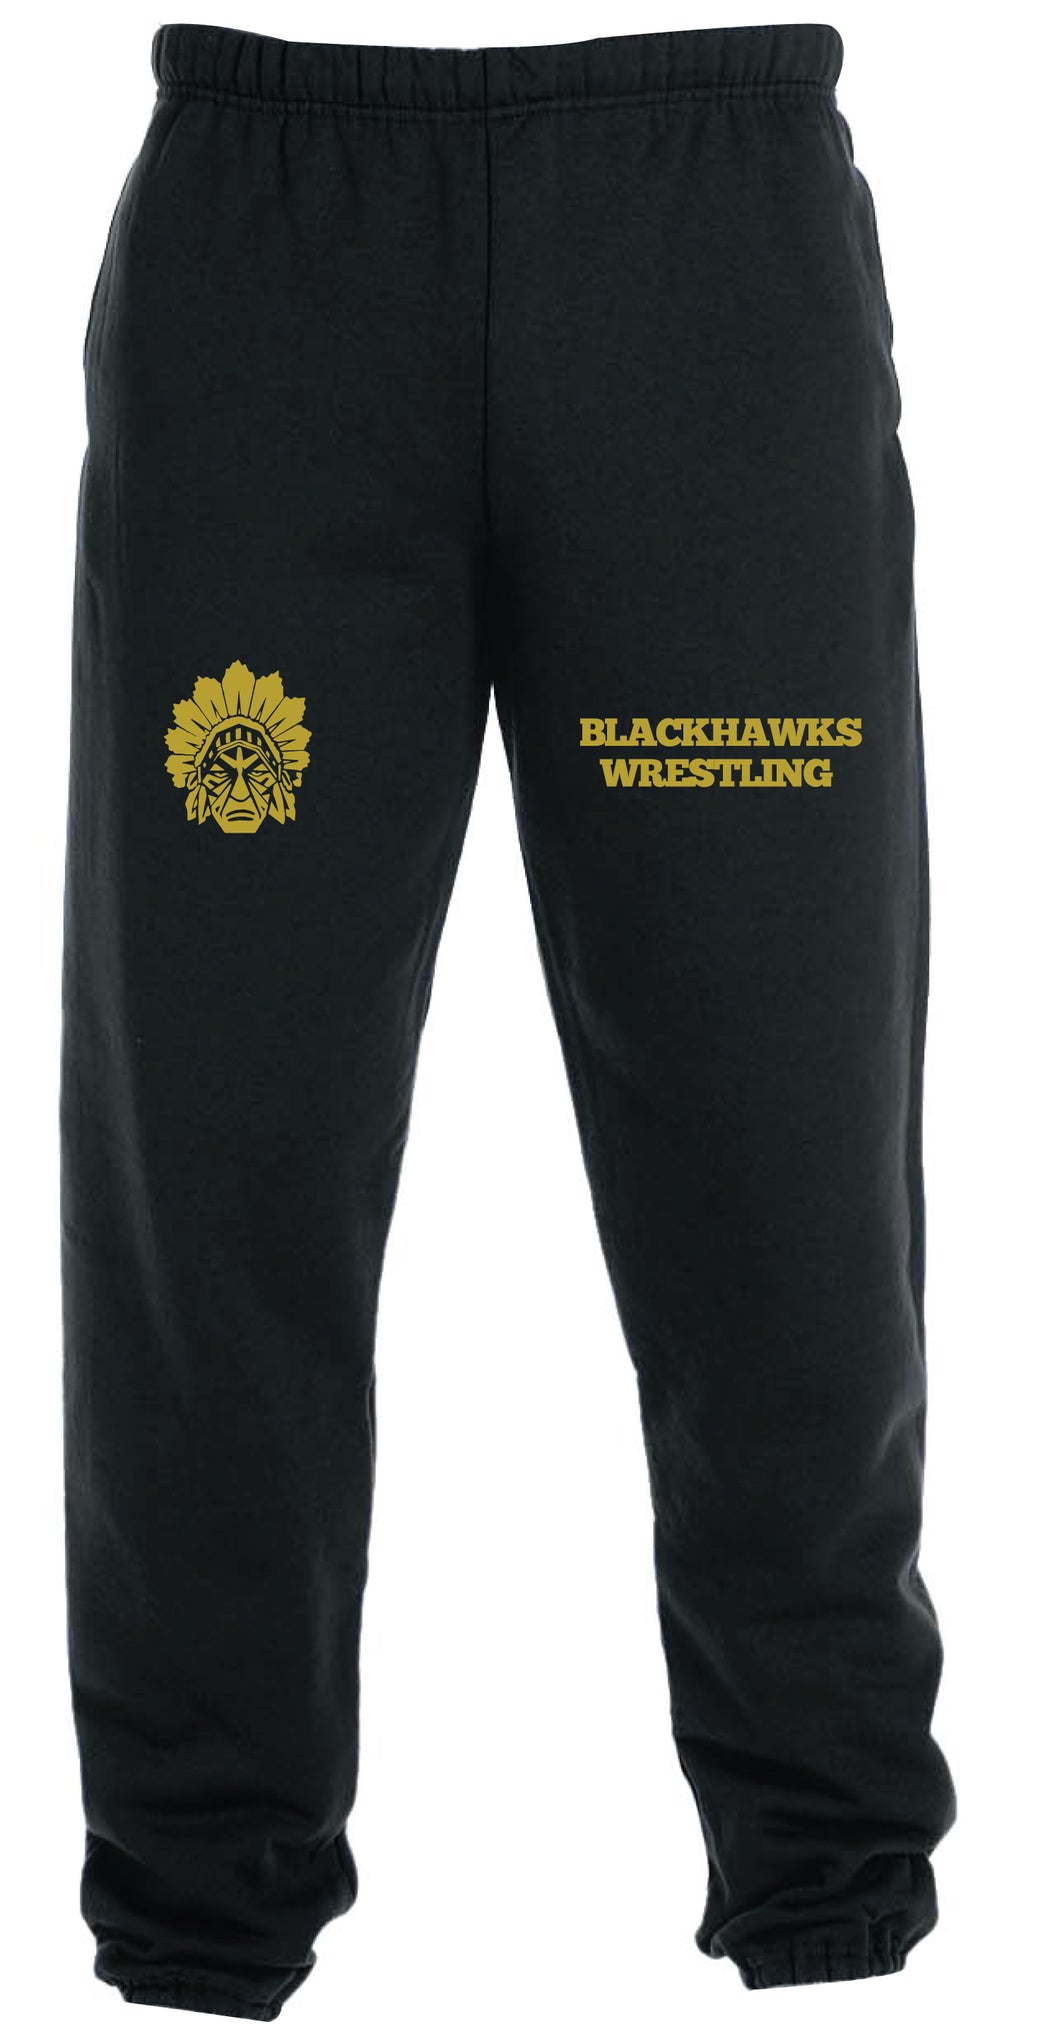 BlackHawks Wrestling Cotton Sweatpants - Black - 5KounT